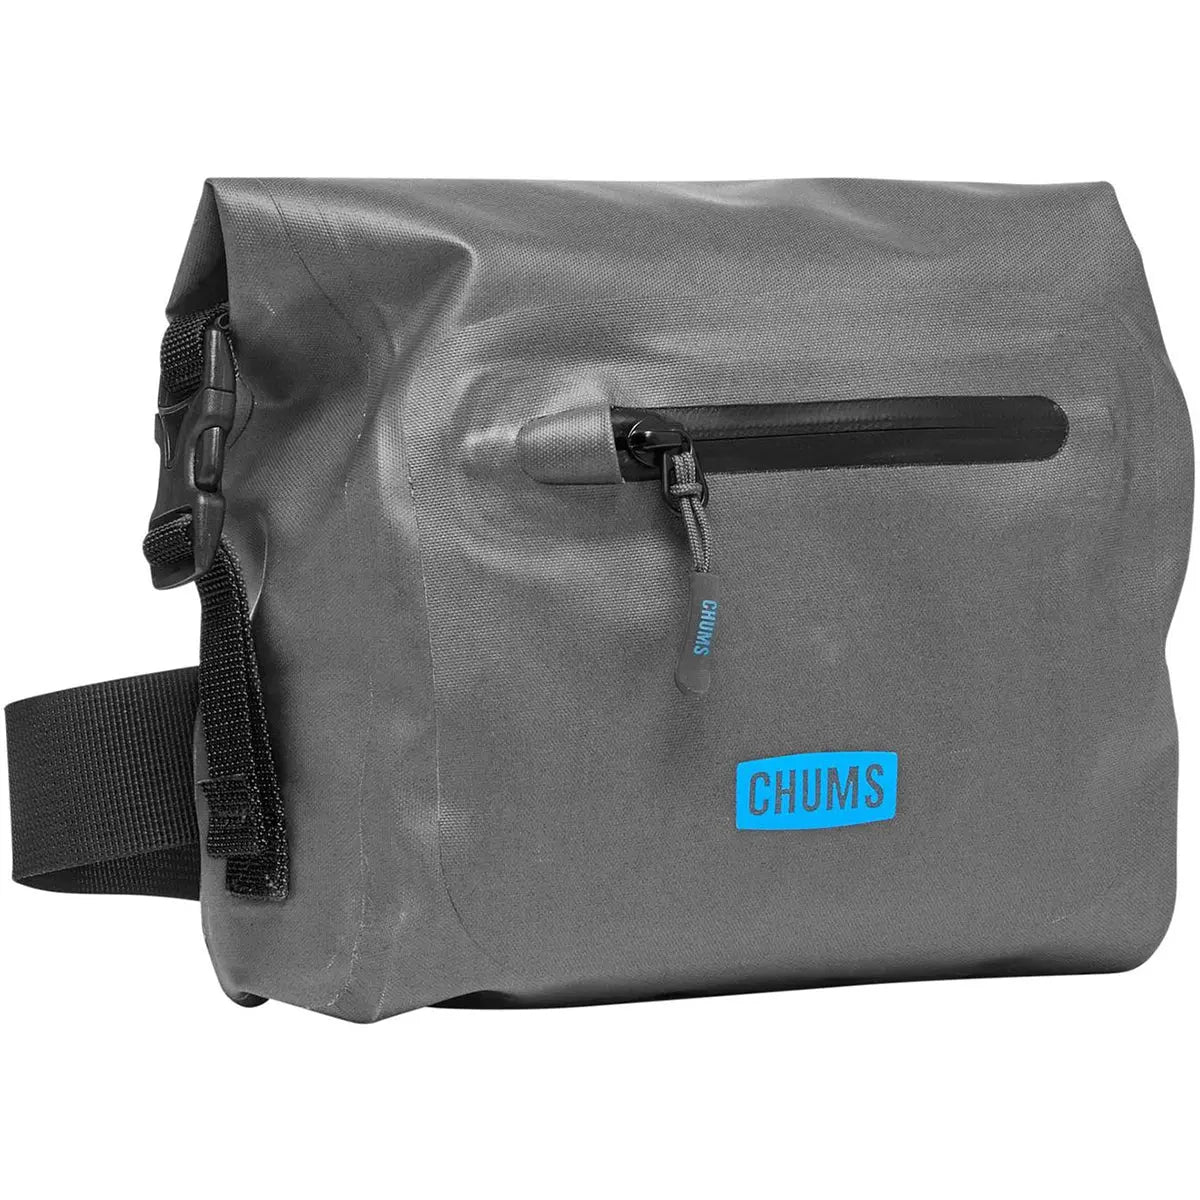 Chums Downstream 4L Waterproof Rolltop Gear Bag - Gray Chums